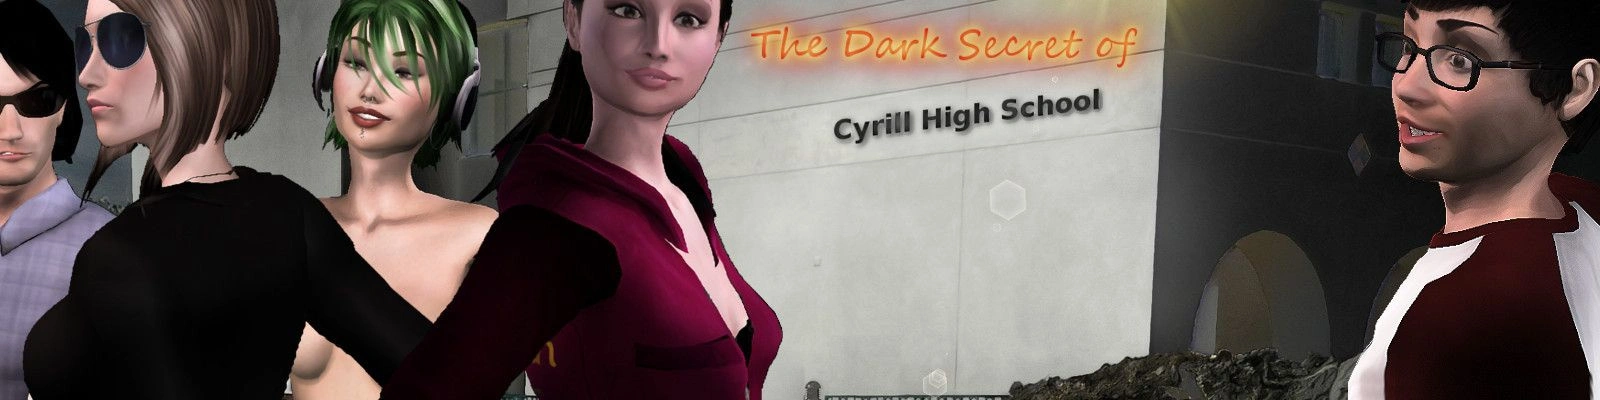 The Dark Secret of Cyrill High School main image